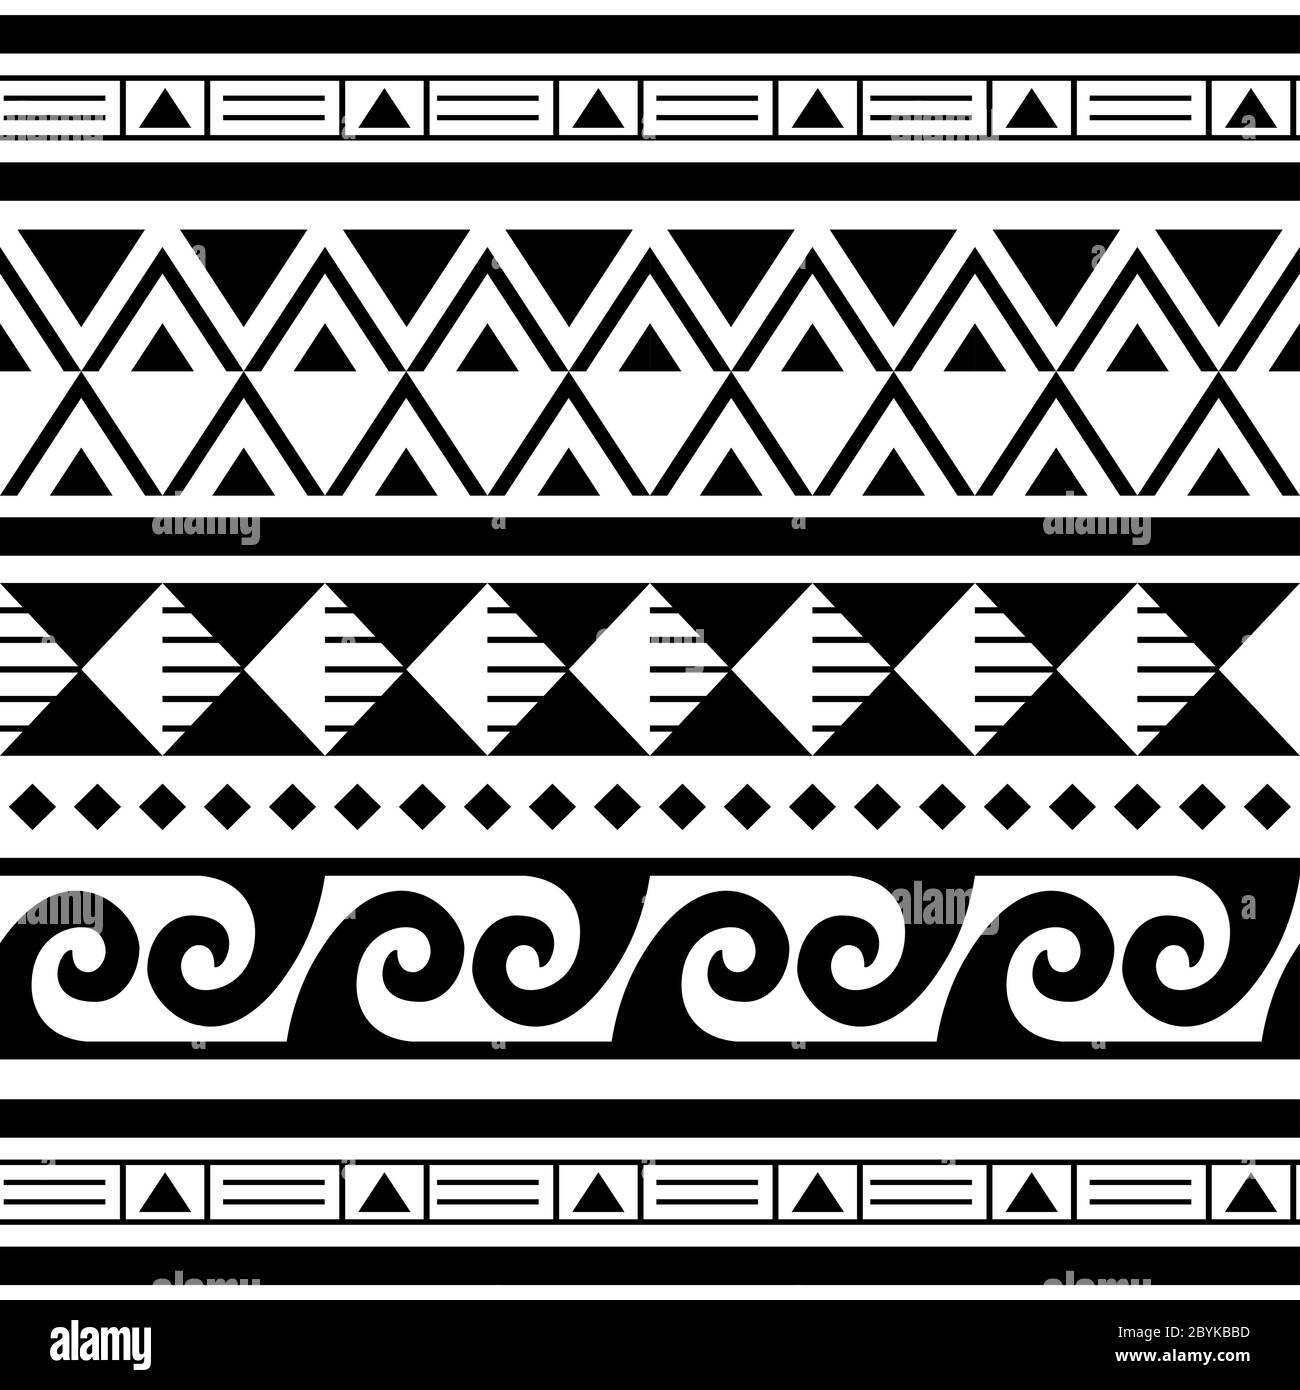 Polynesian Tattoo Line Pattern Tribal Pattern Stock Vector (Royalty Free)  1428544415 | Shutterstock